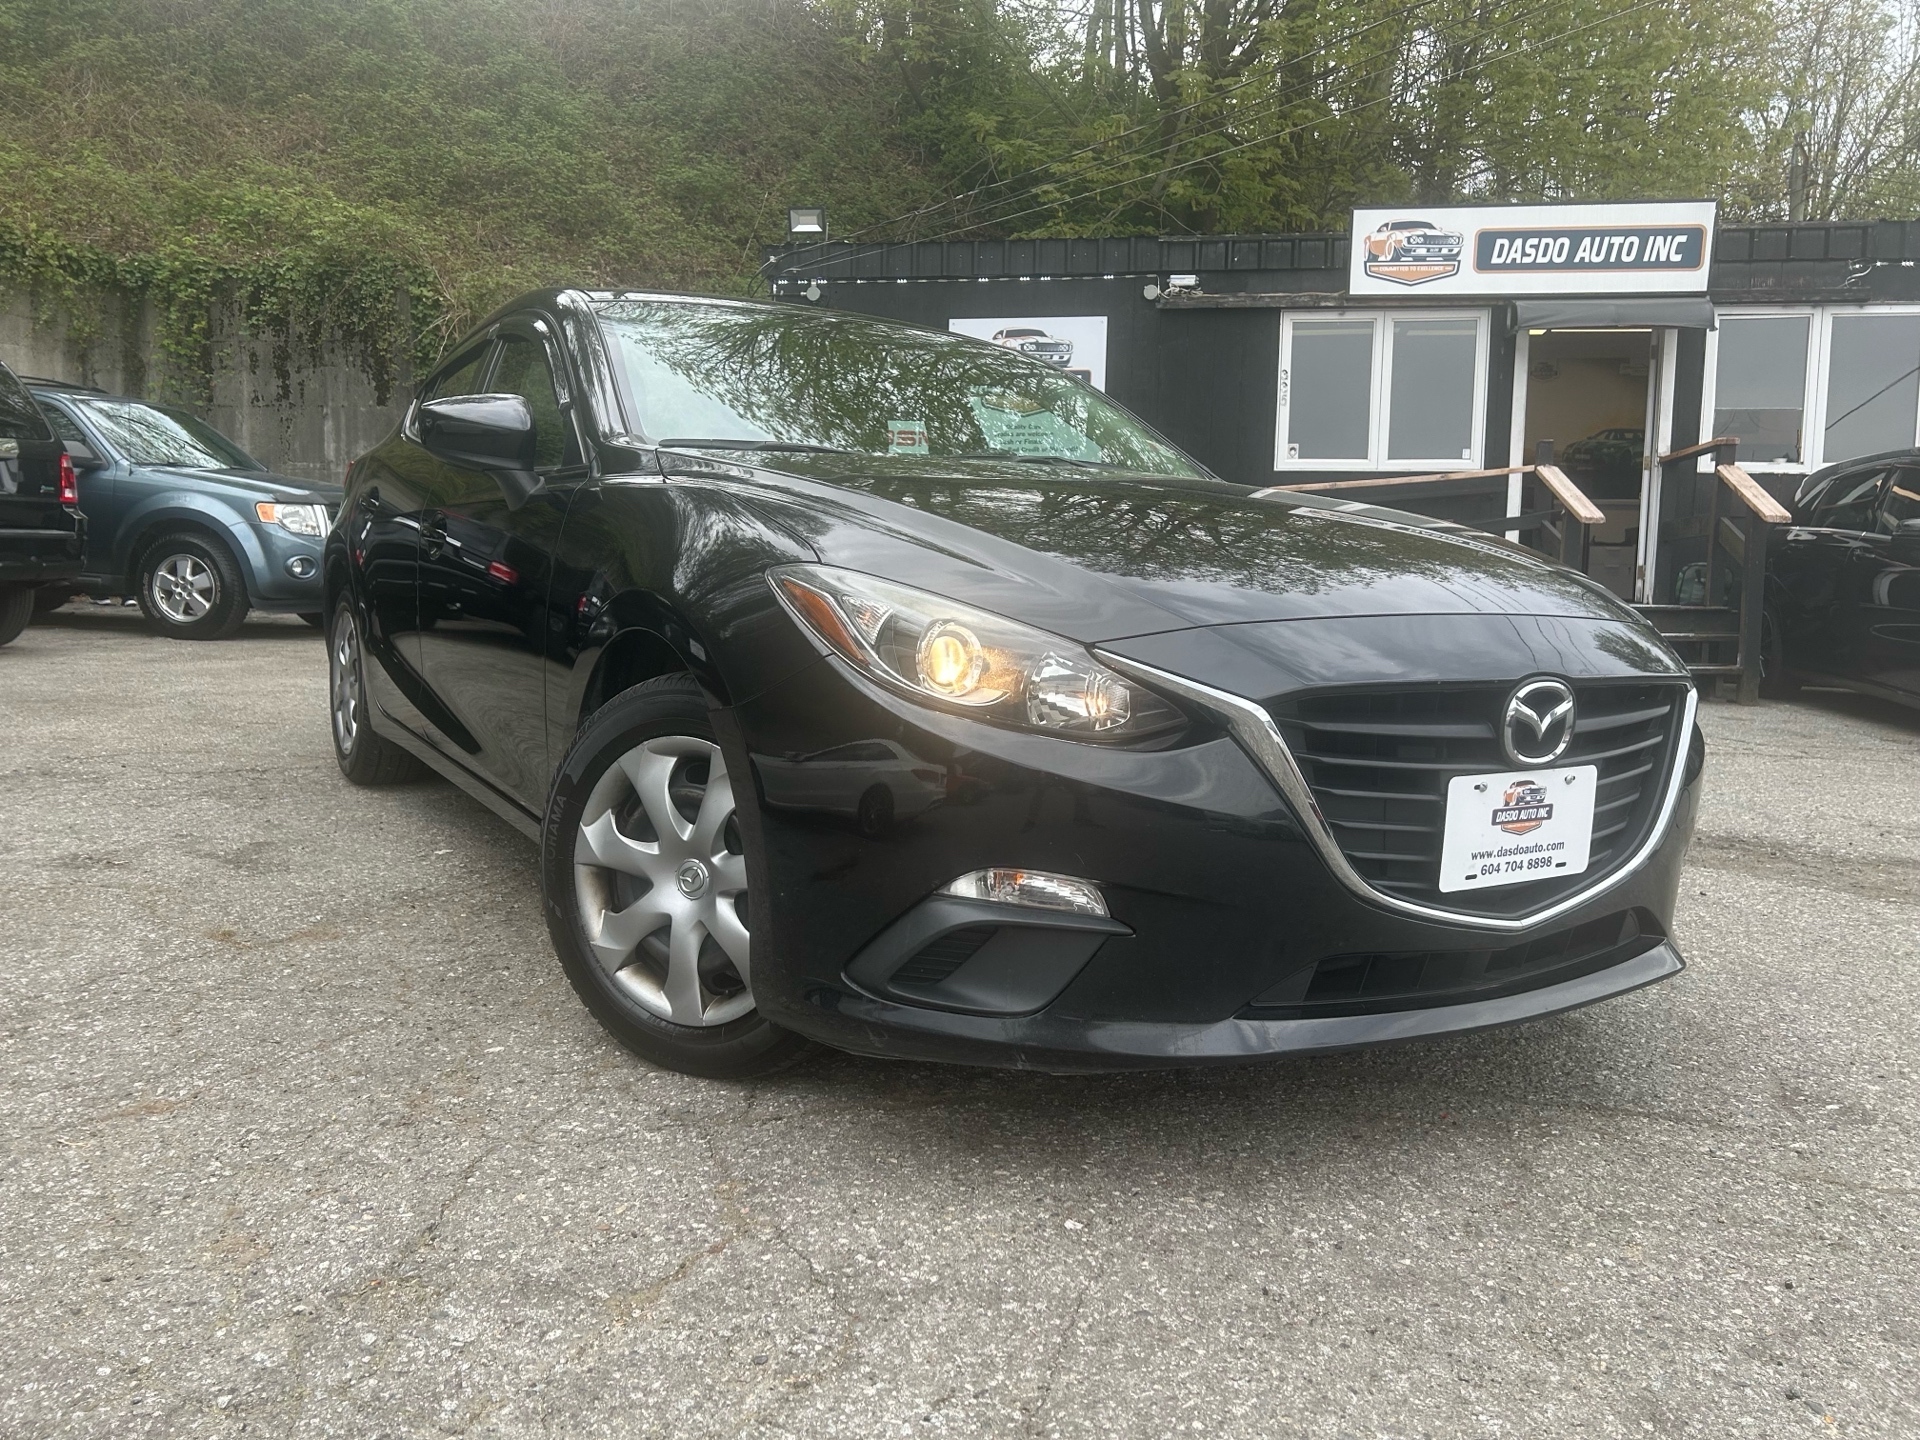 2015 Mazda Mazda3 GX Manual FWD - Good on Gas!